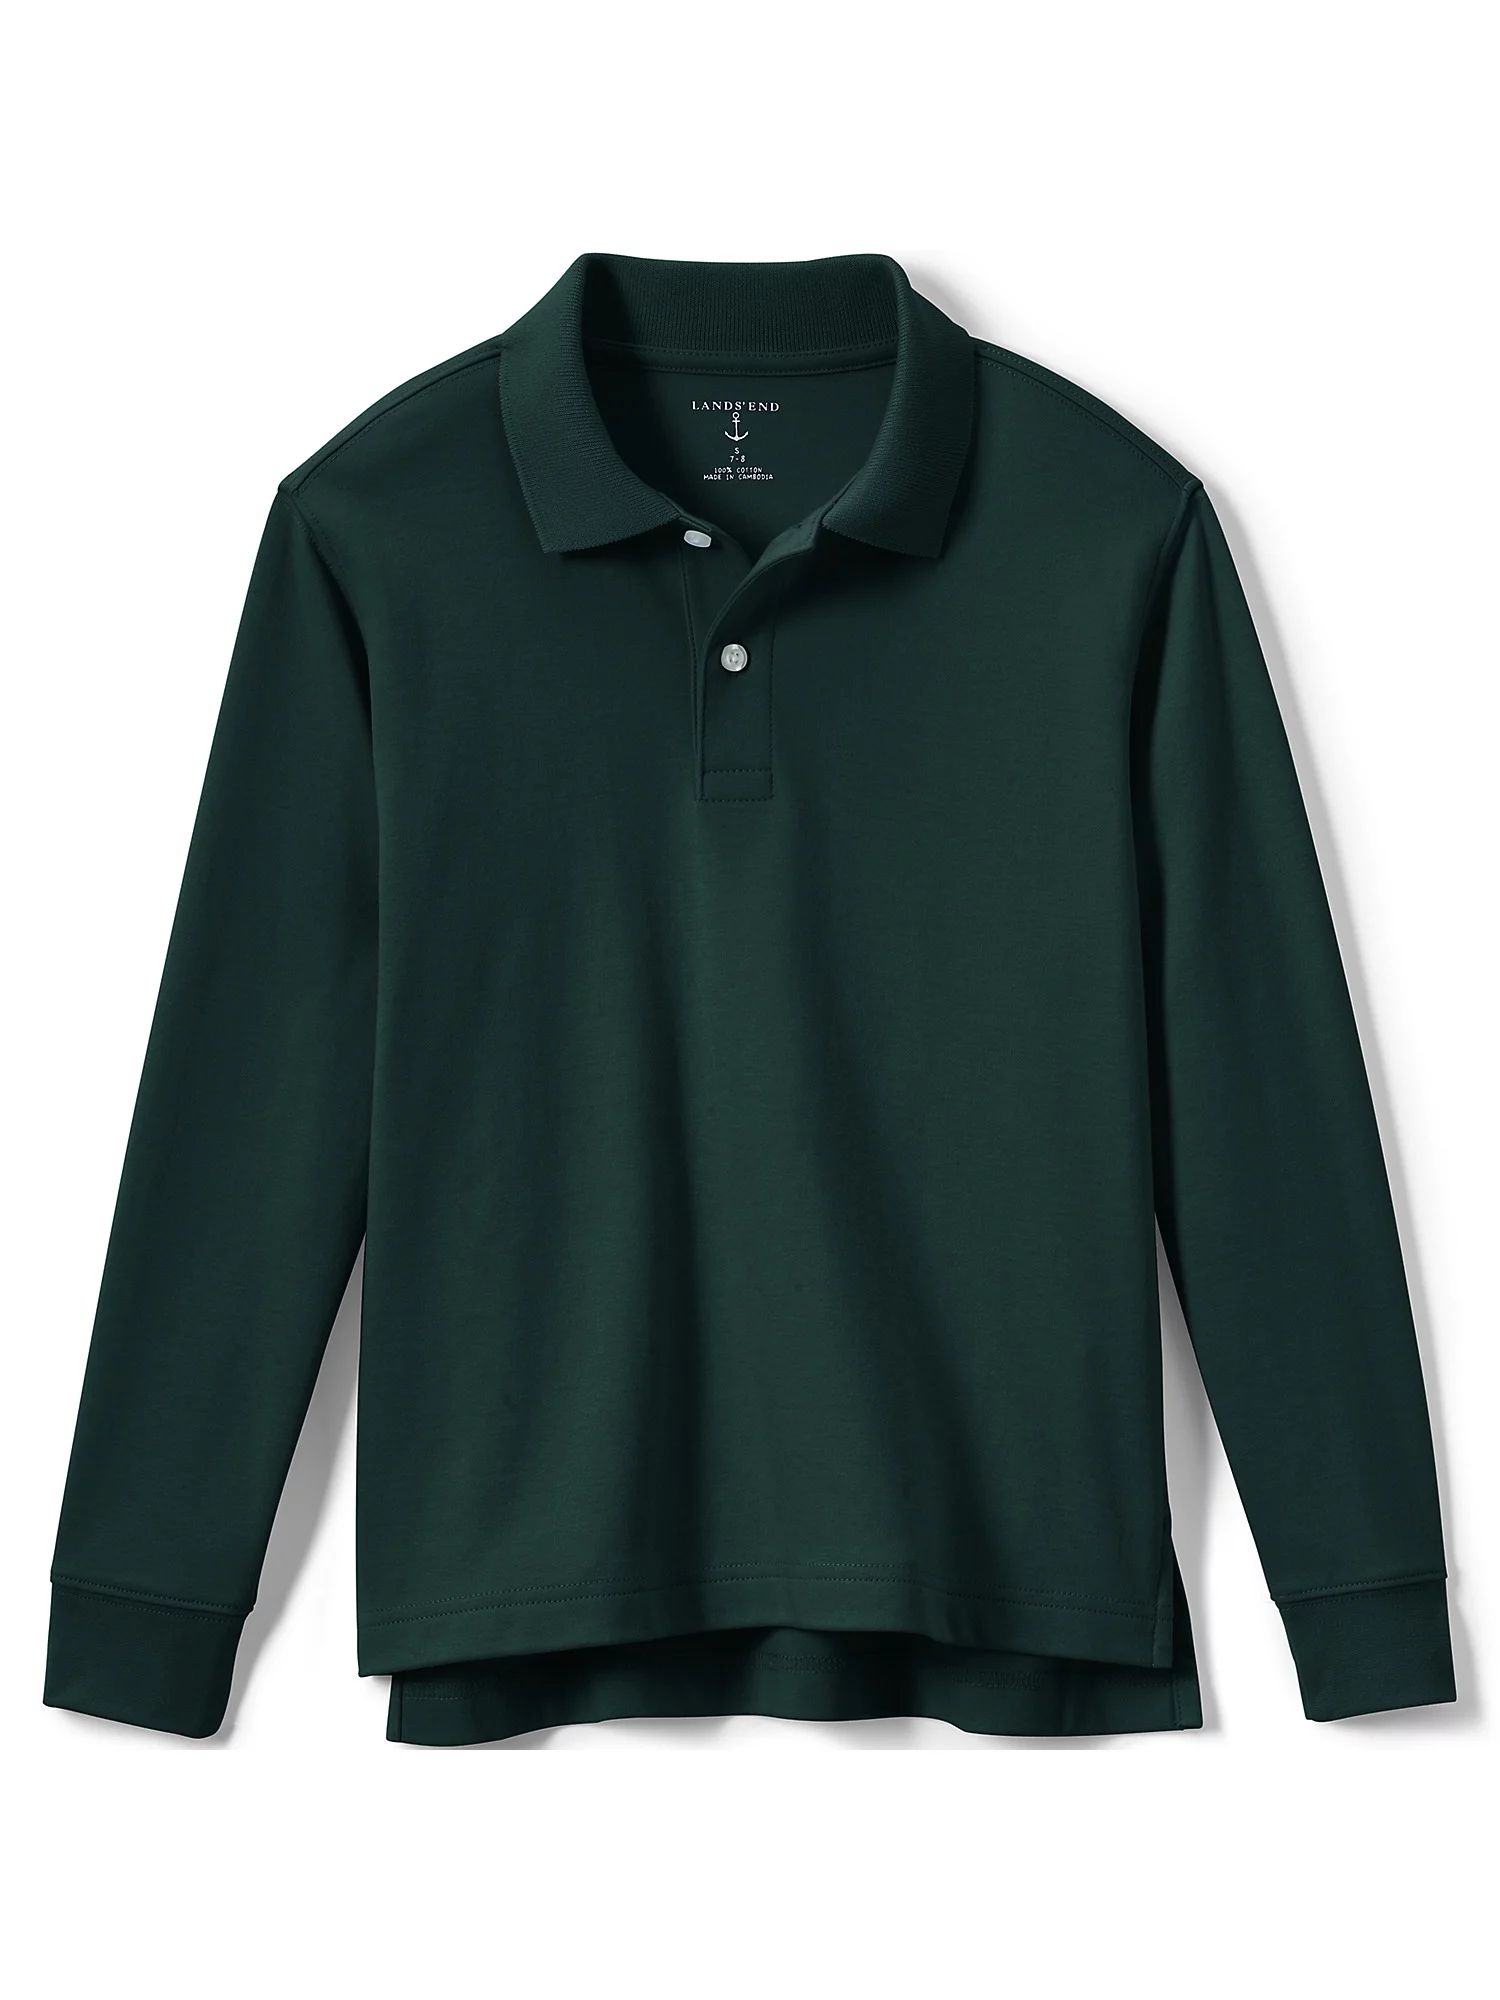 Lands' End School Uniform Kids Long Sleeve Interlock Polo Shirt | Walmart (US)